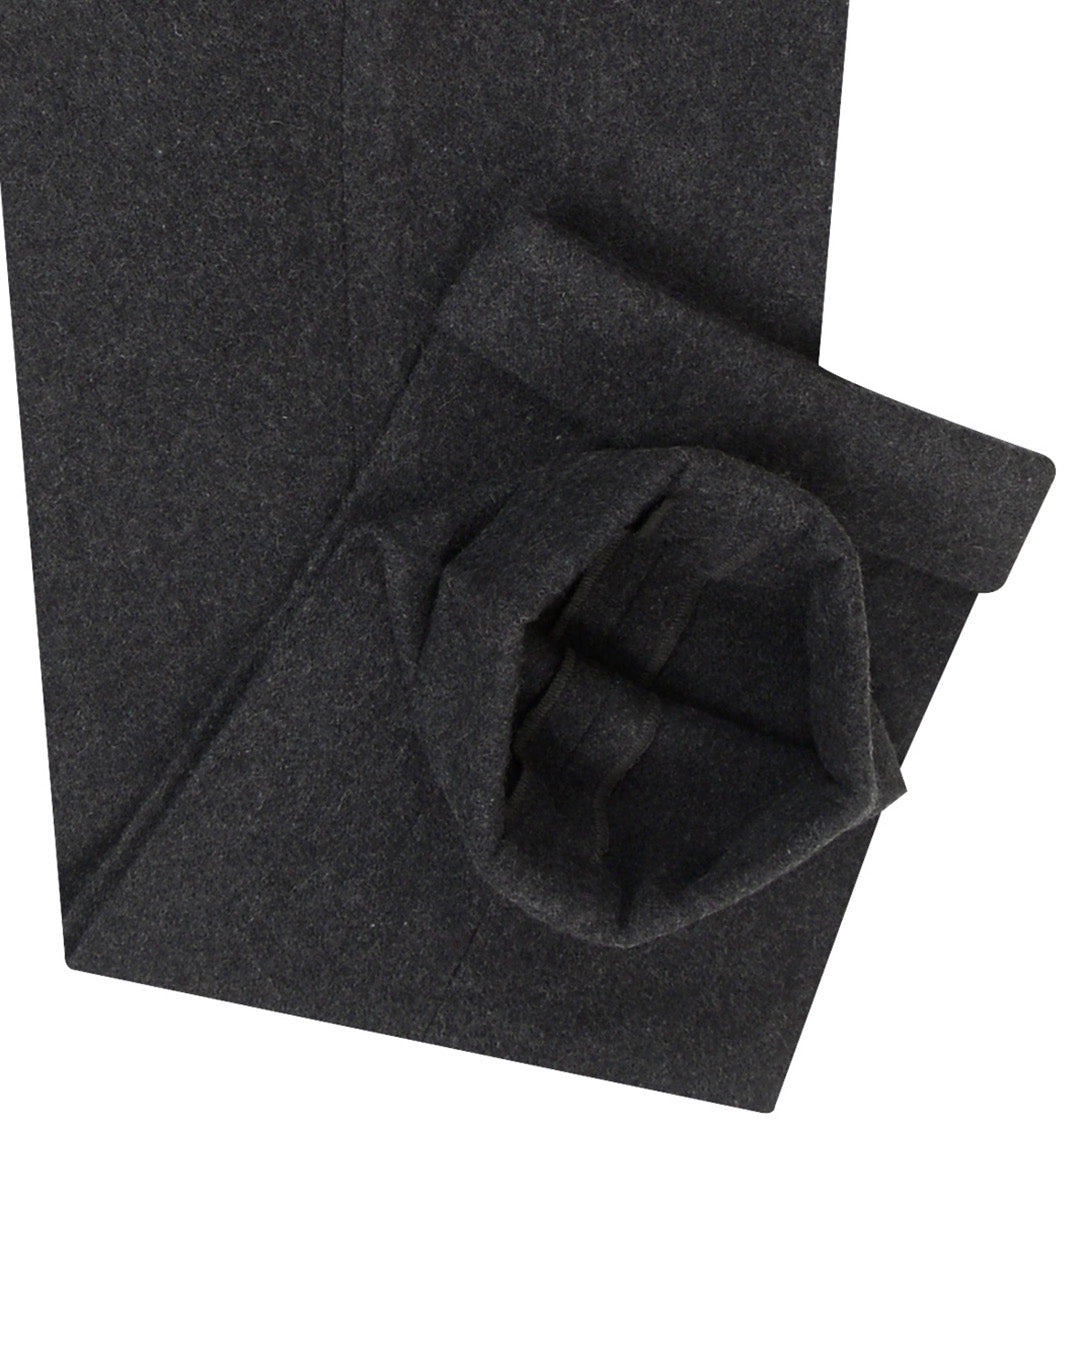 Charcoal Grey 100% Wool Flannel